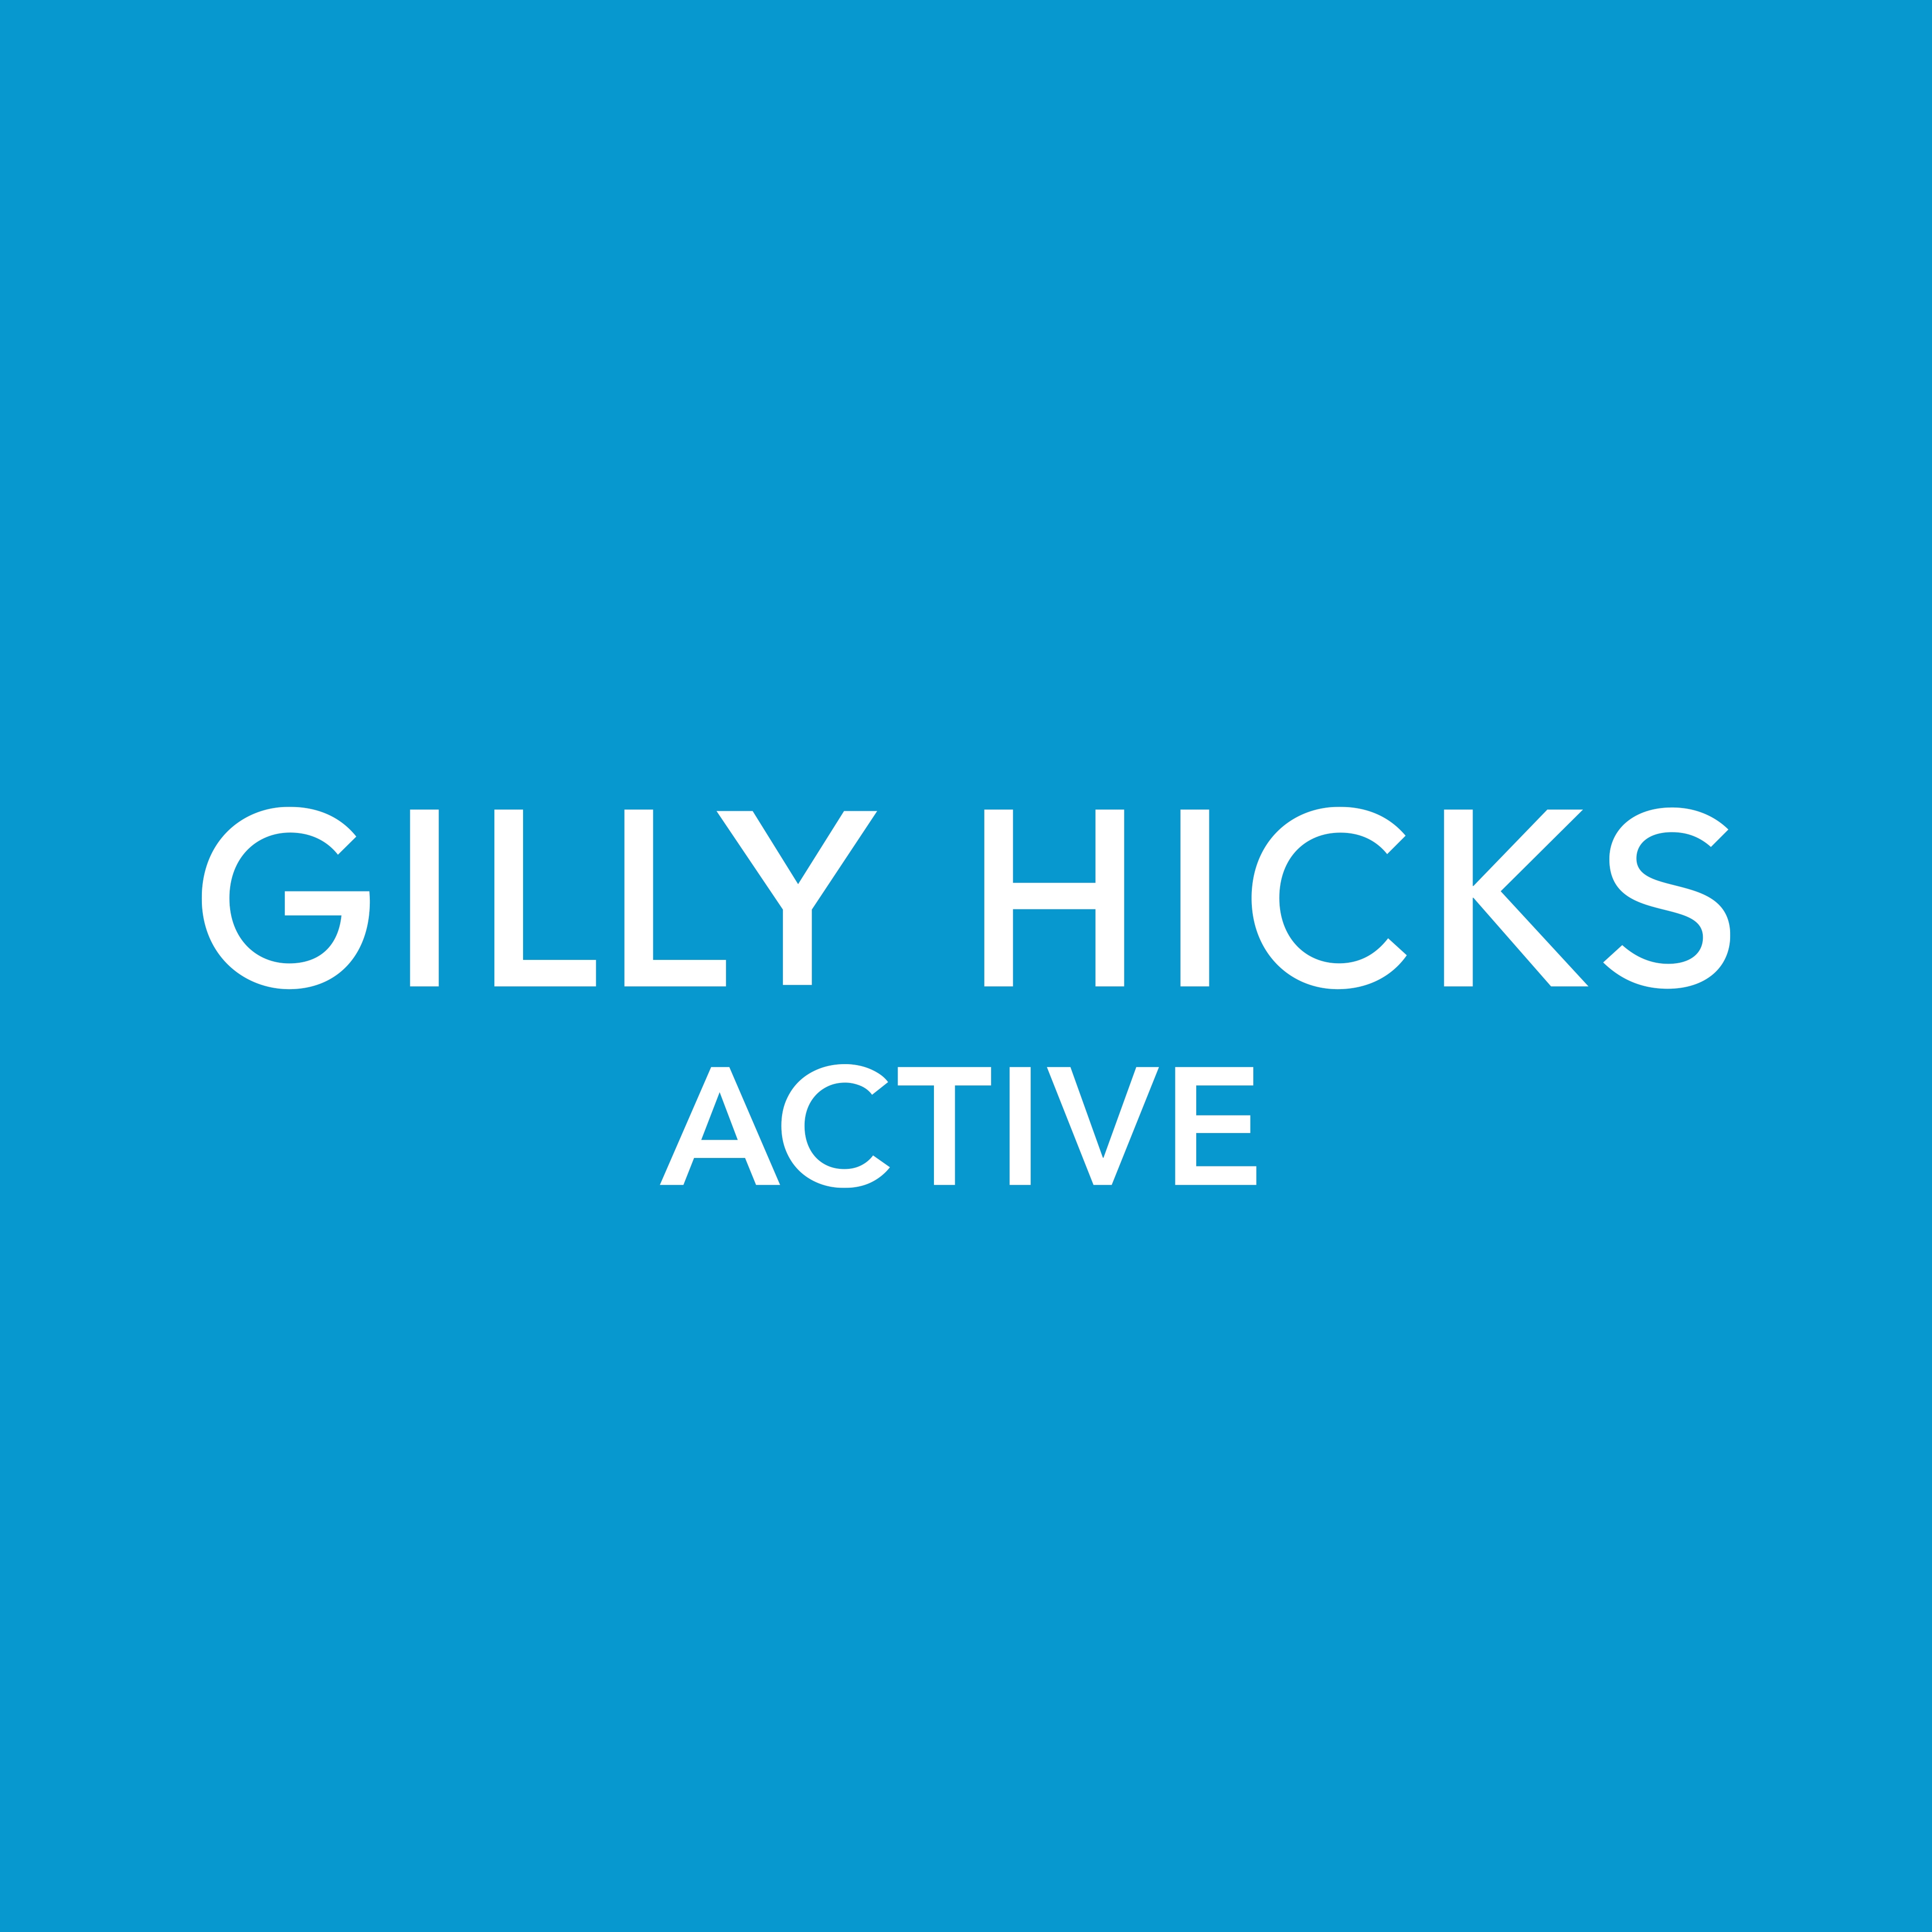 Gilly Hicks - Wikipedia